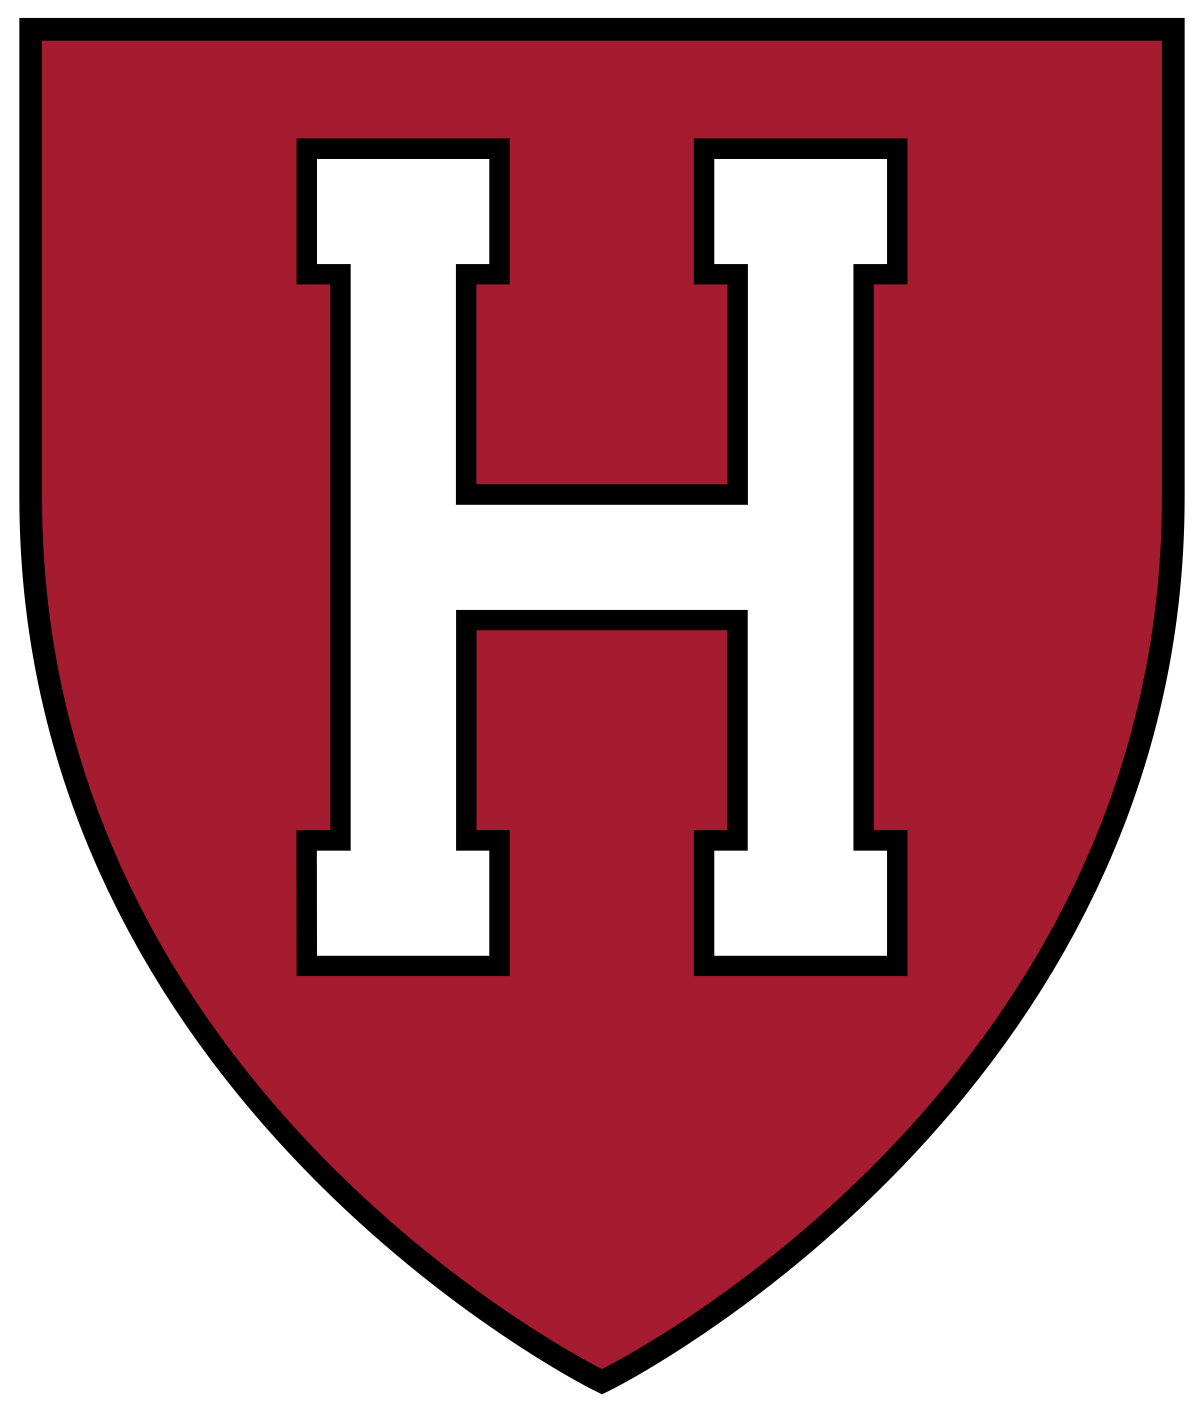 Google, Harvard, and Stanford logos.